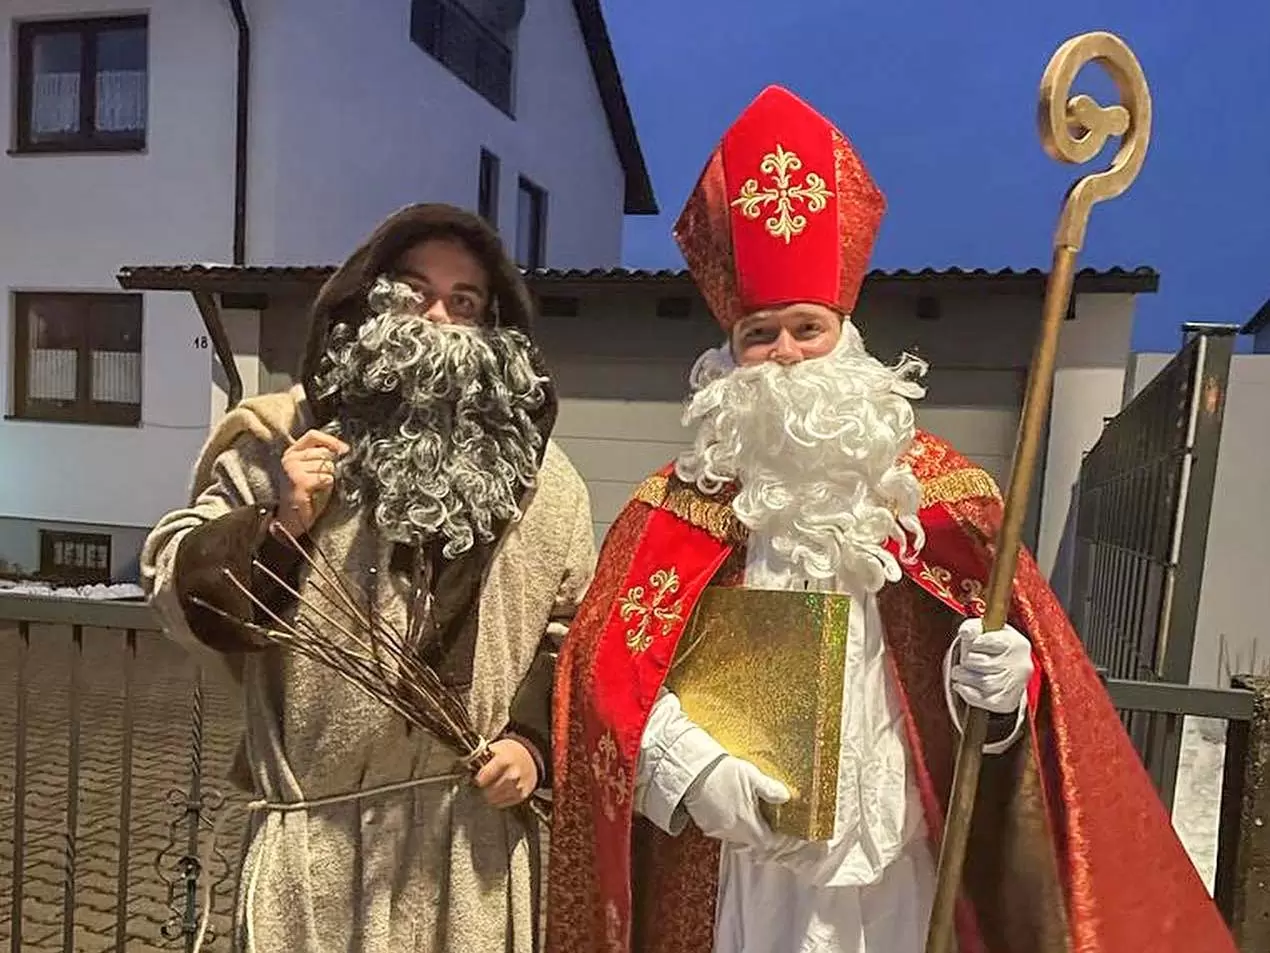 Knecht Ruprecht and Saint Nikolas in Germany